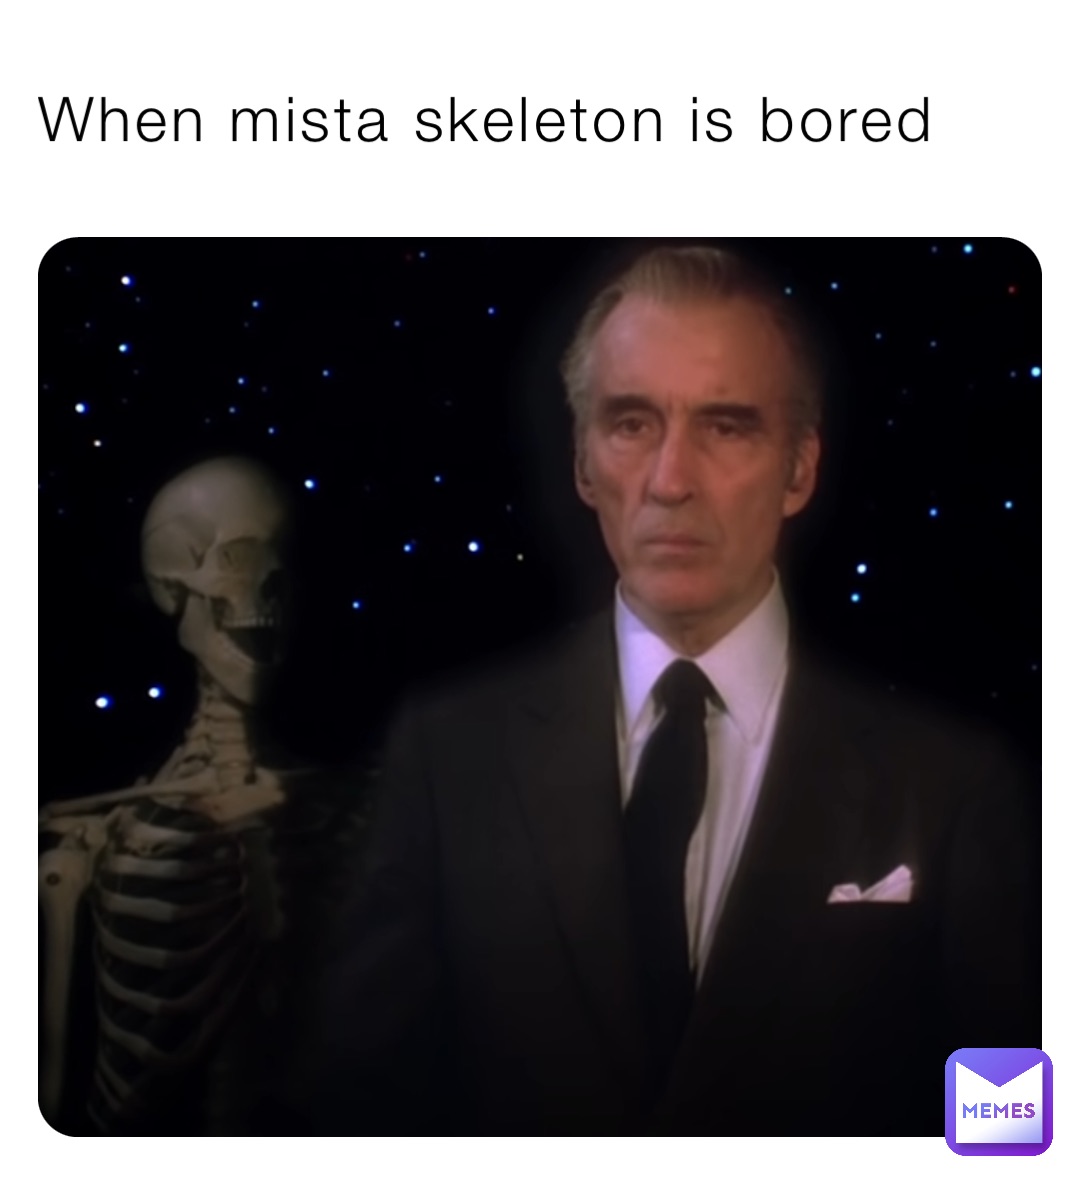 When mista skeleton is bored